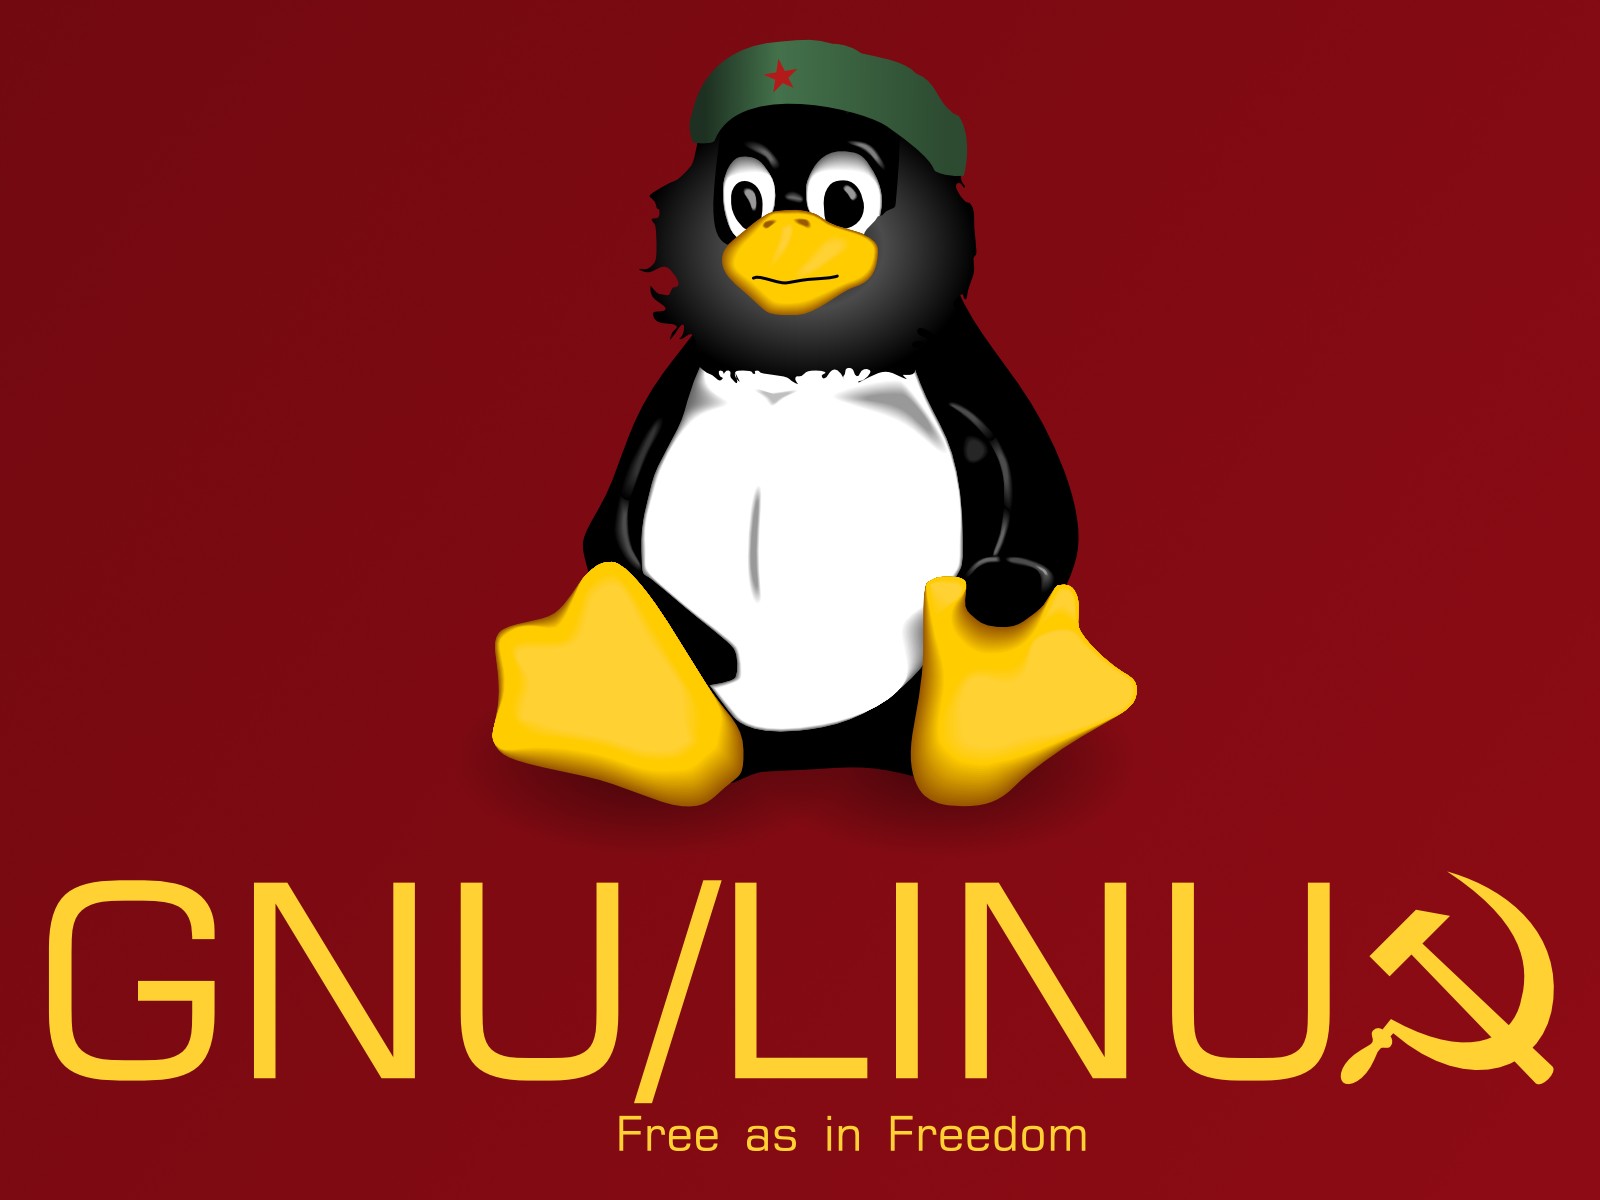 che_tux_free_as_freedom.jpg